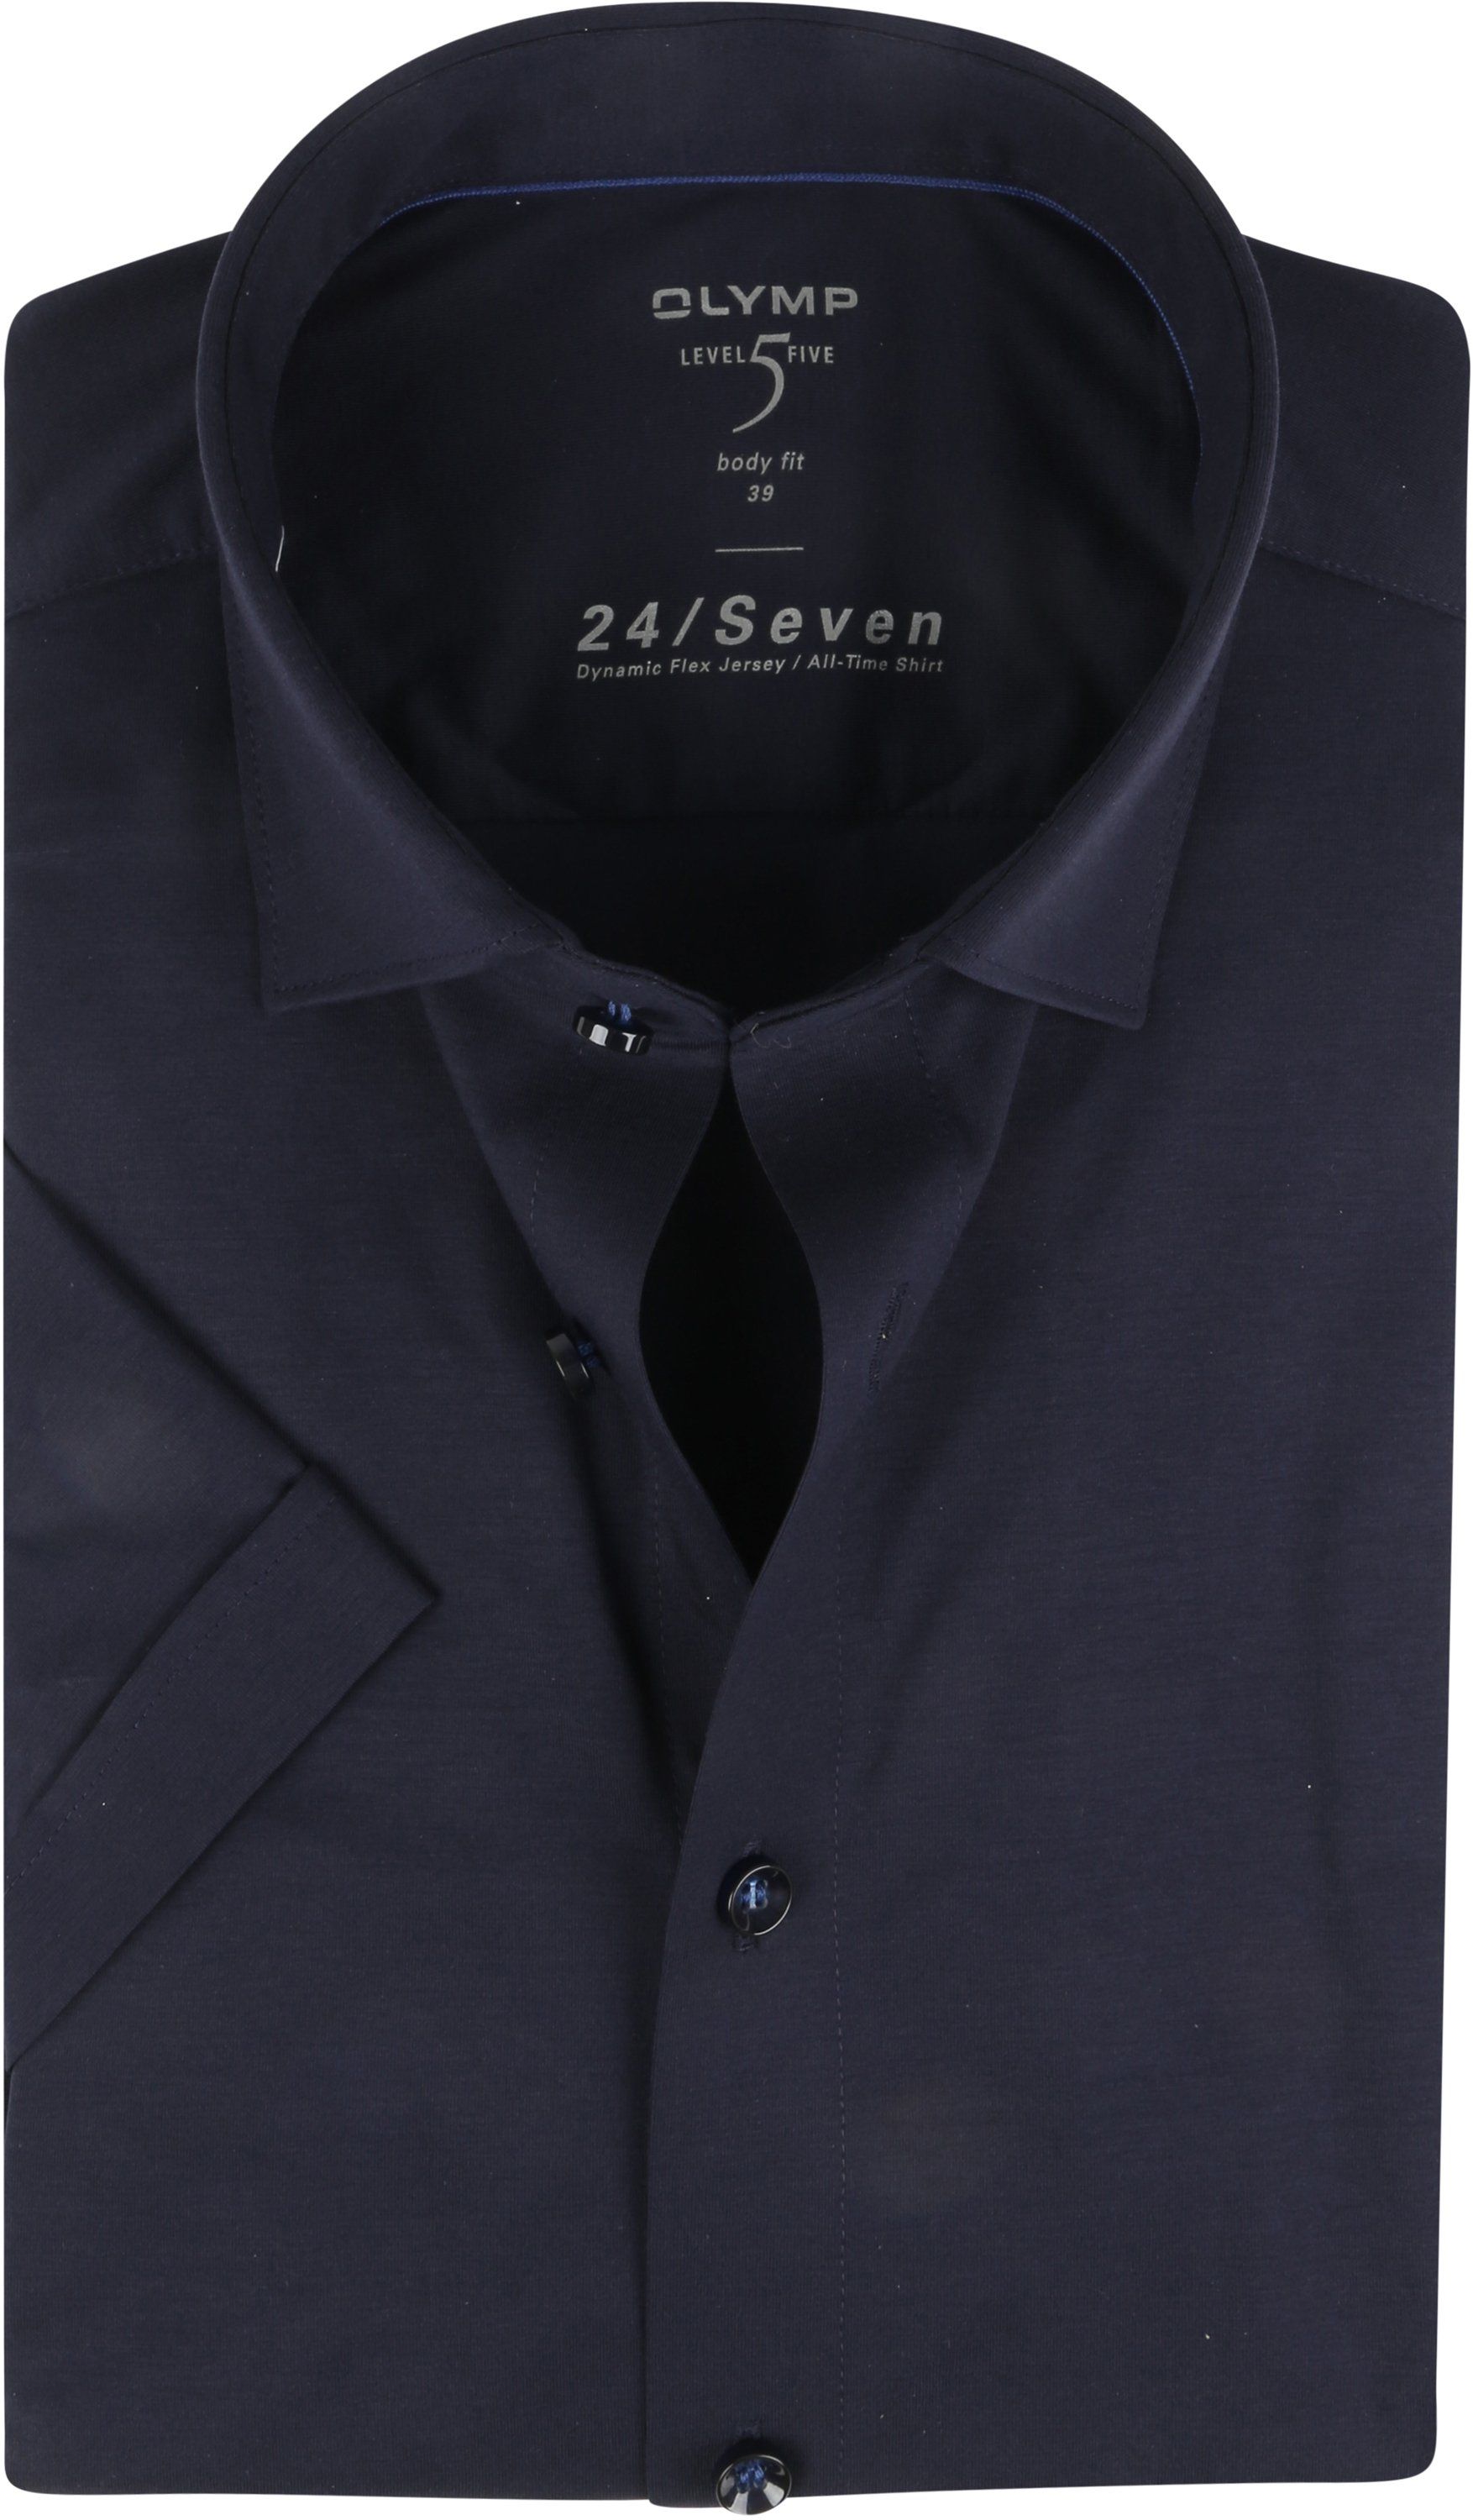 OLYMP Level 5 Shirt 24/Seven Dark Blue Dark Blue size 15